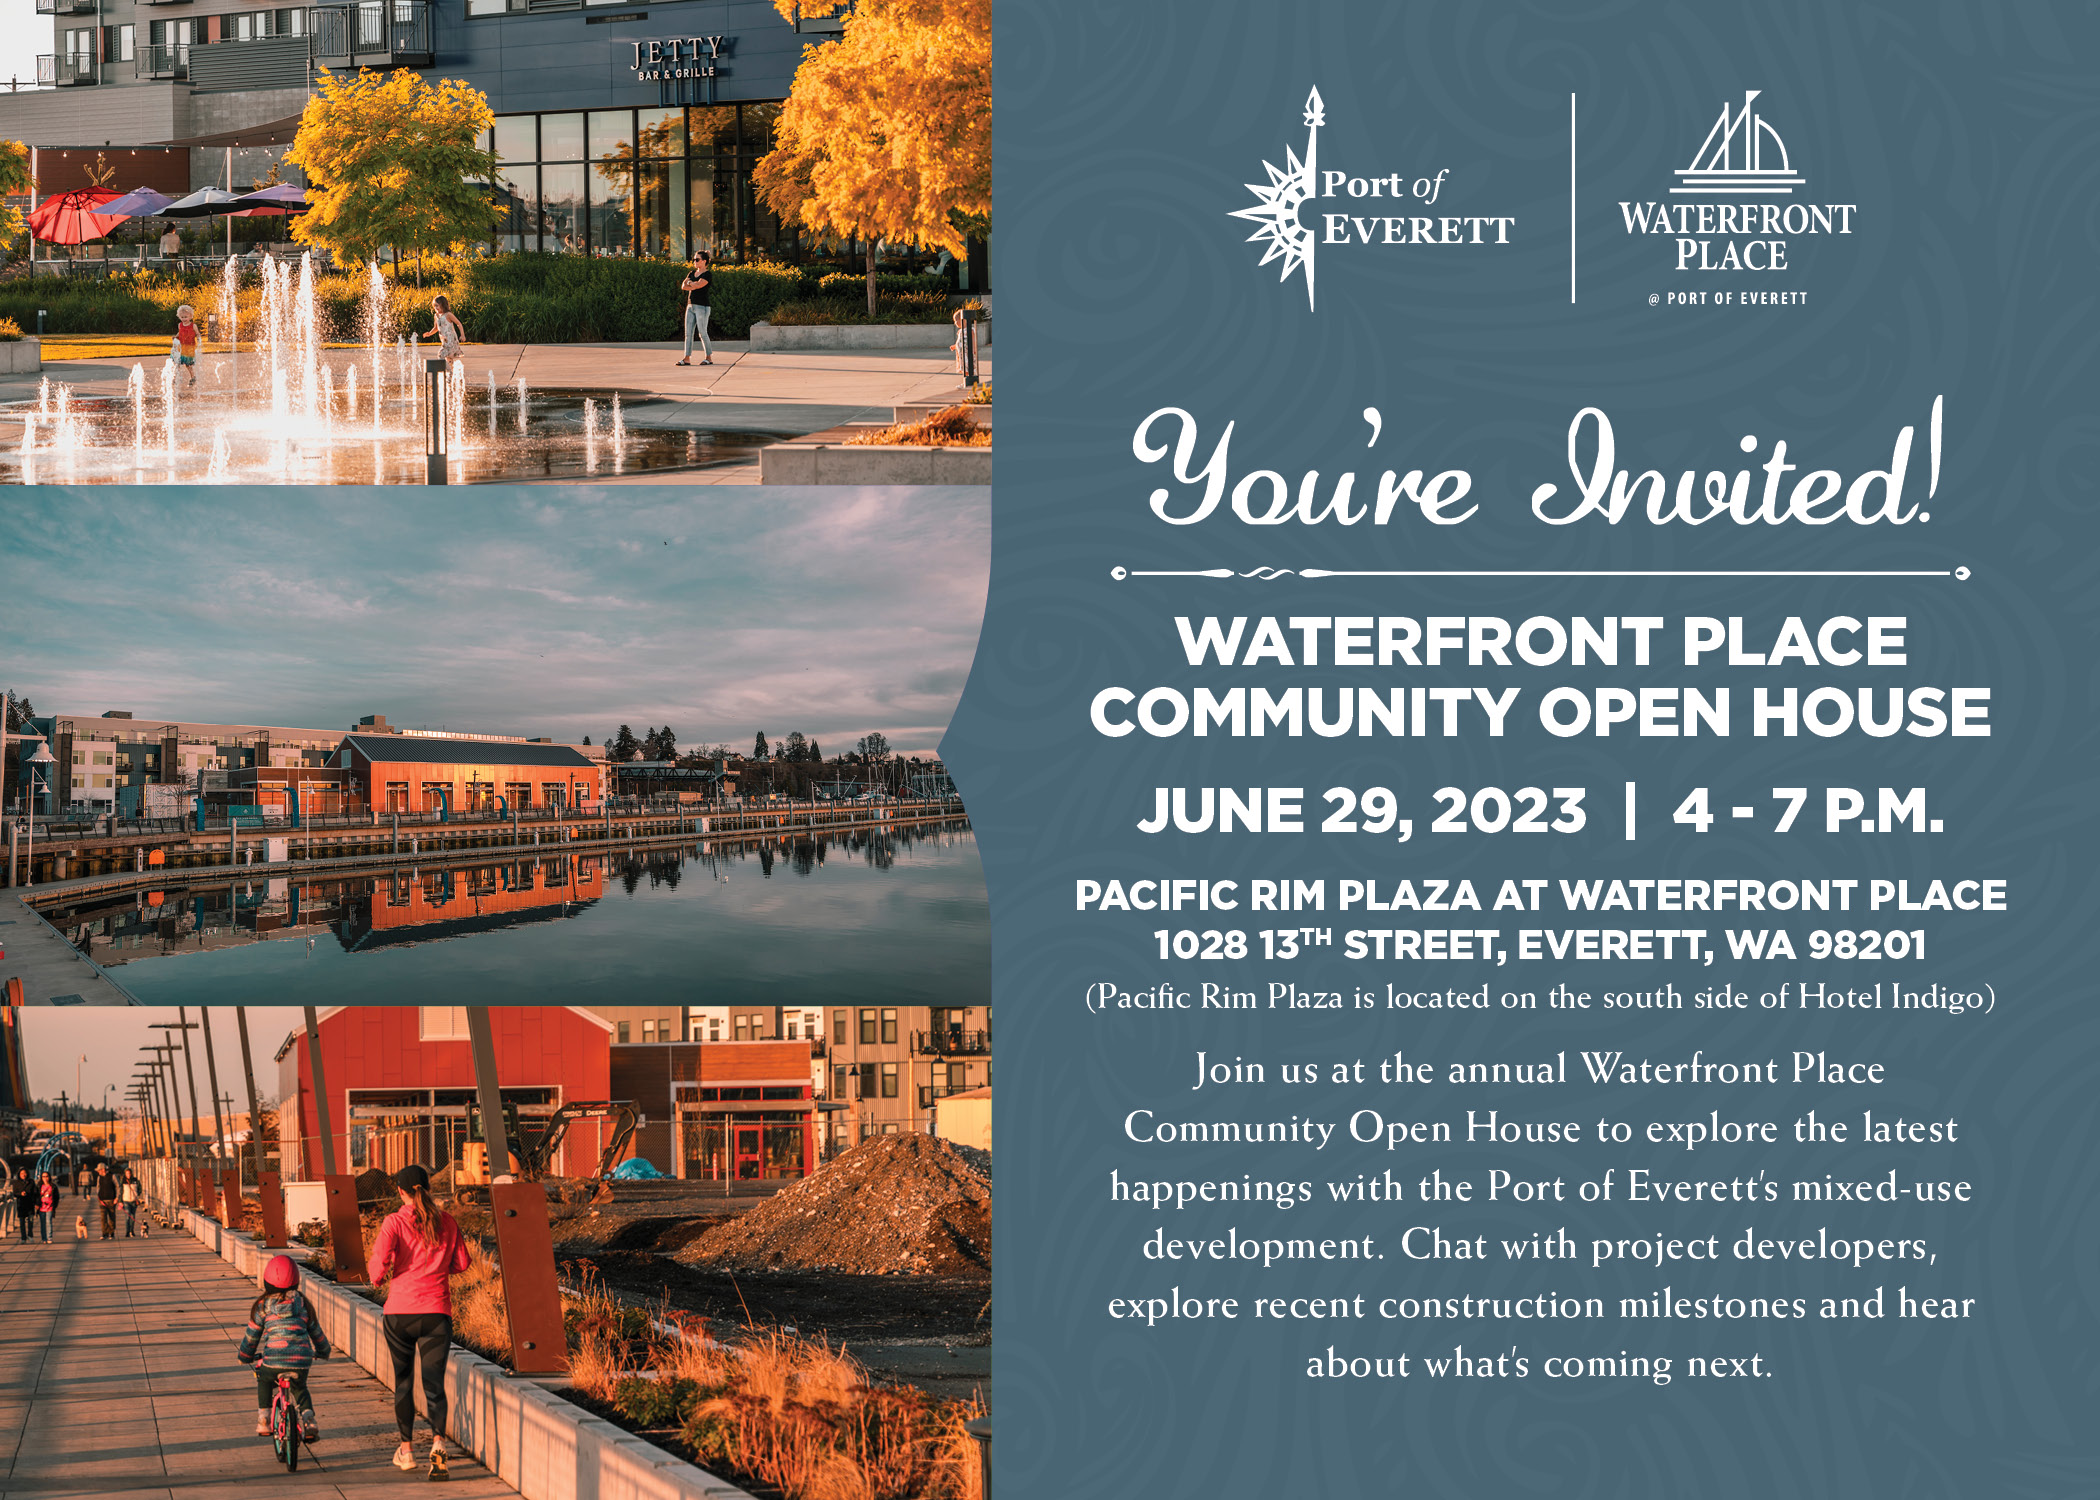 WPC Coummunity Open House Invite 2023